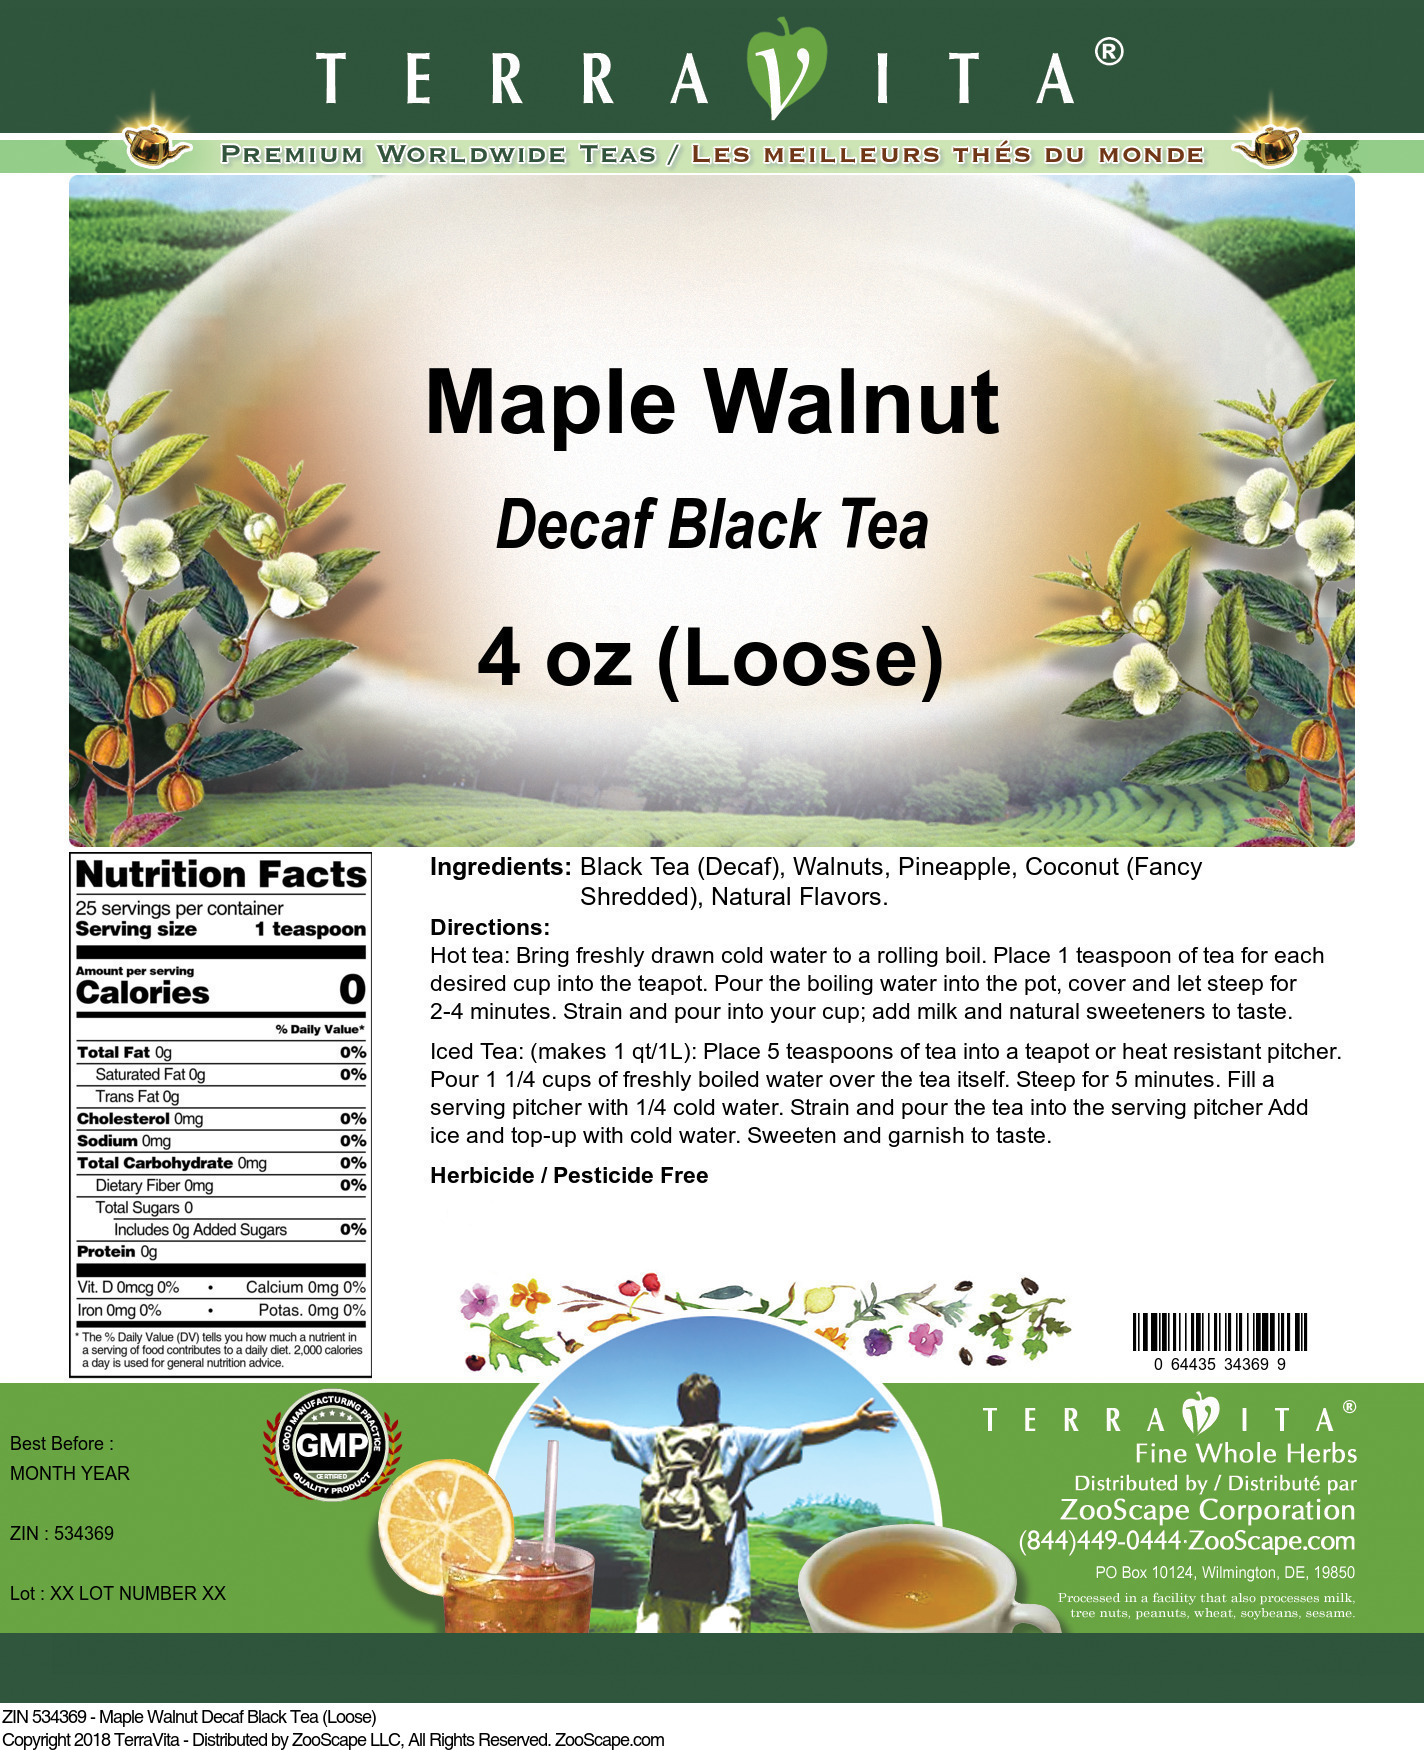 Maple Walnut Decaf Black Tea (Loose) - Label